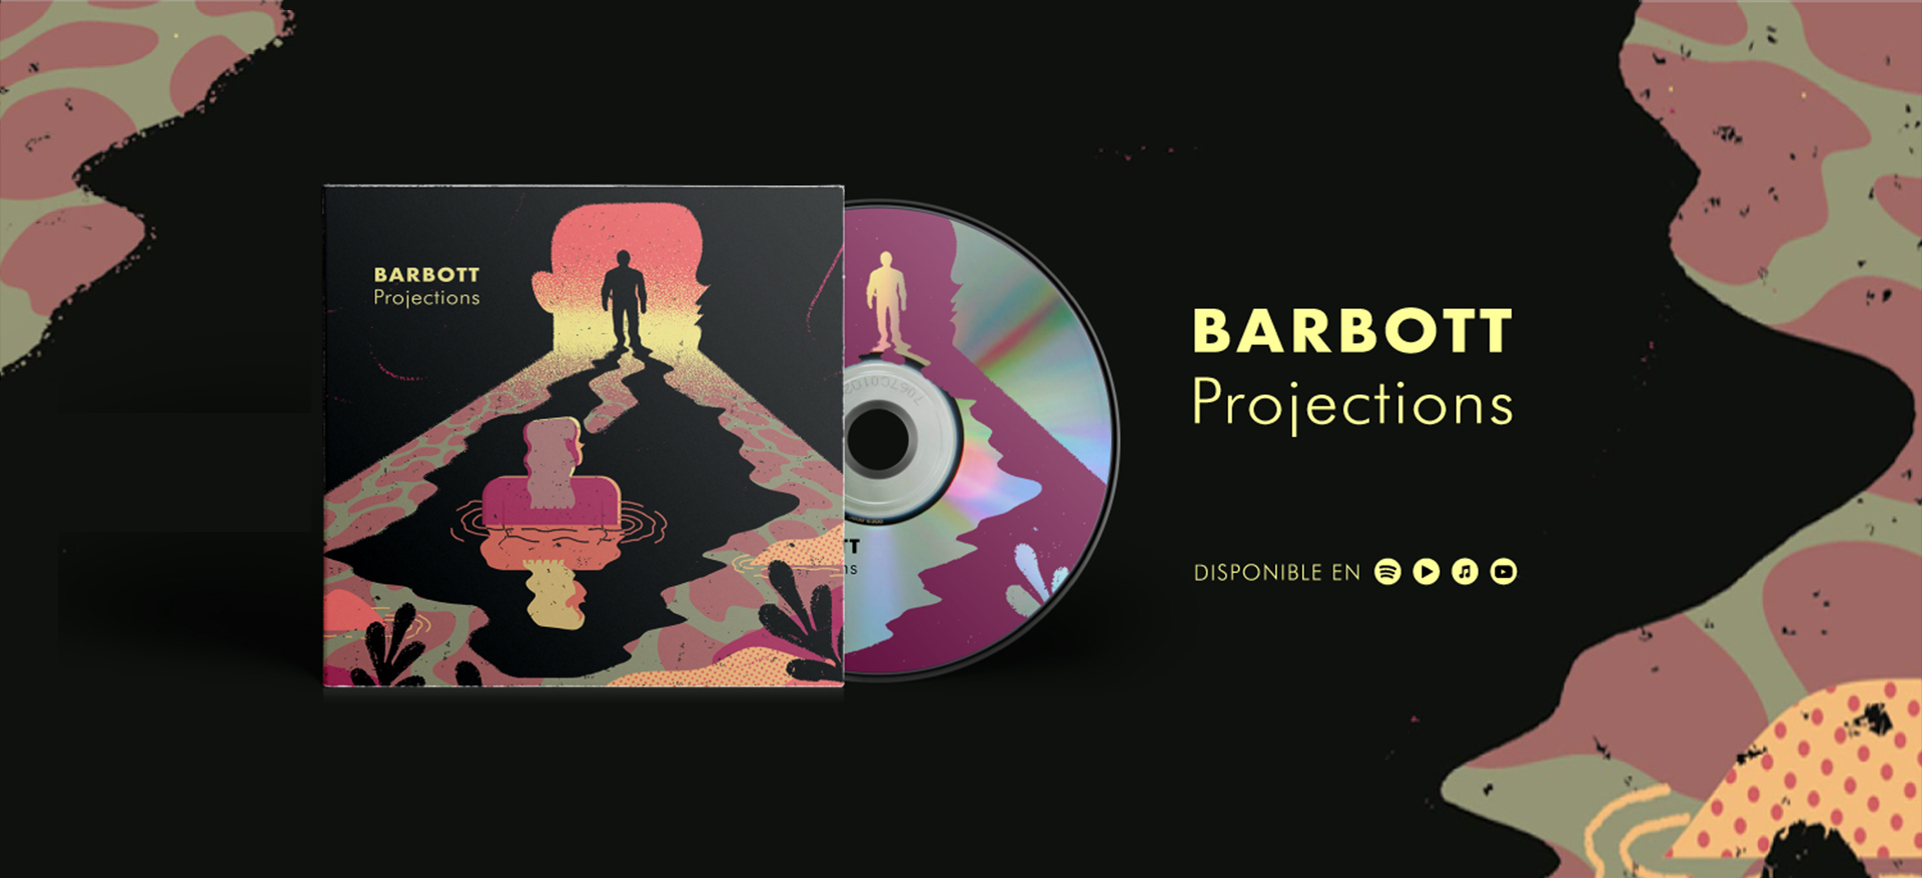 Barbott Projections